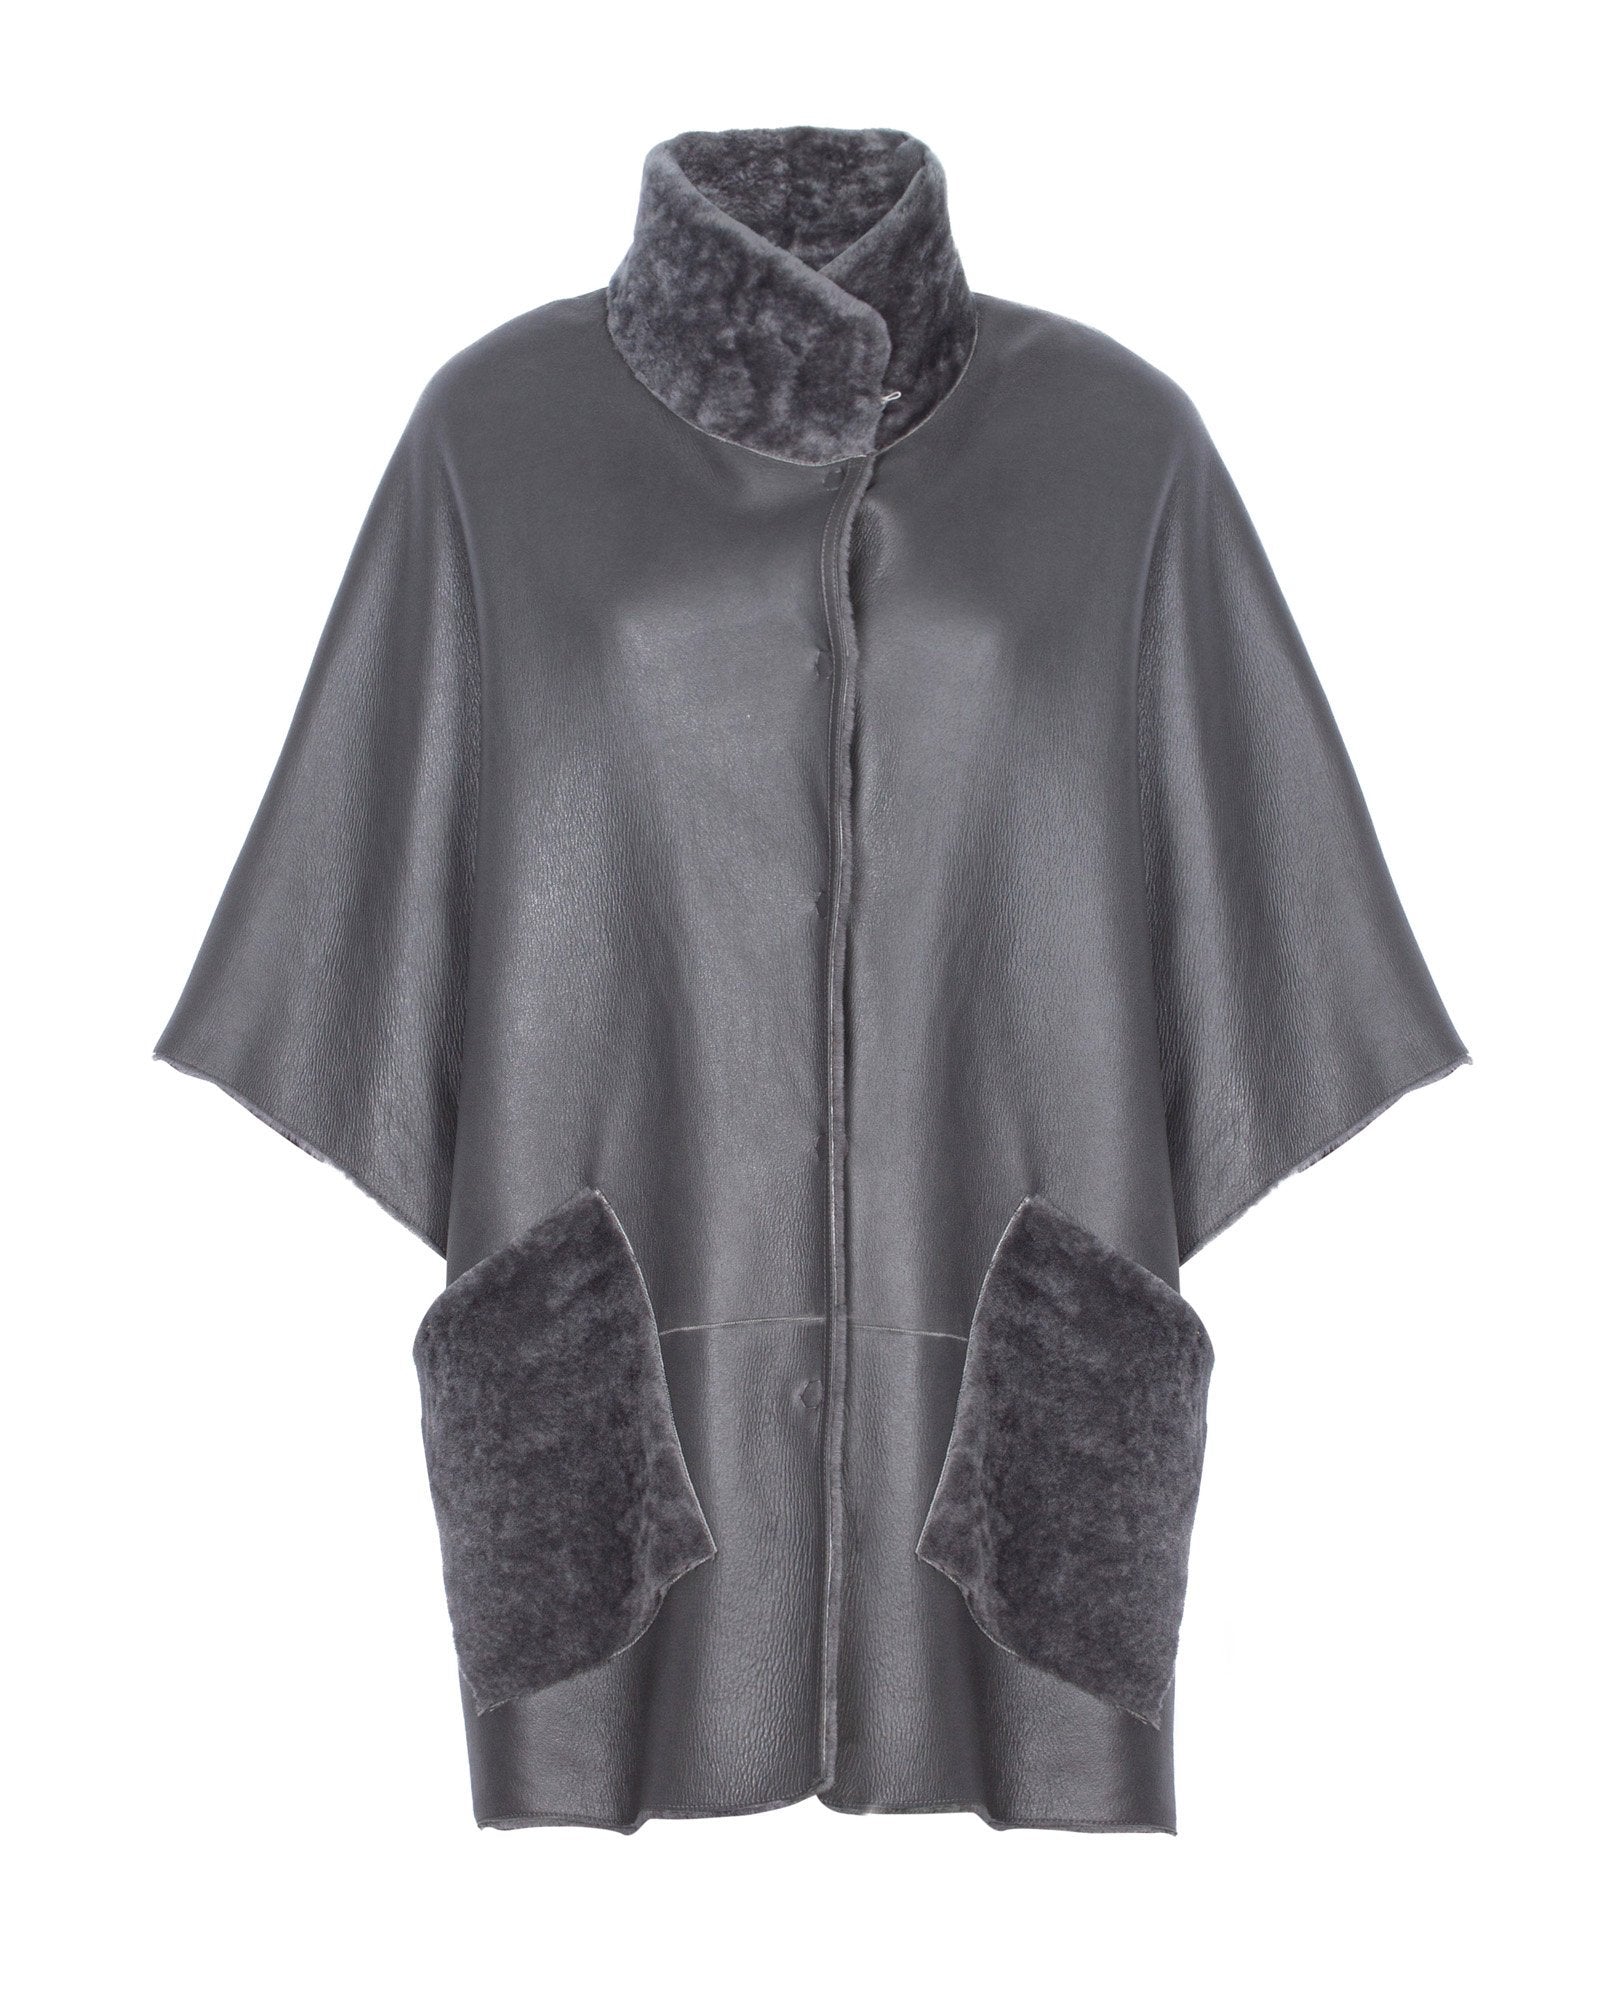 Grey Shearling Coat